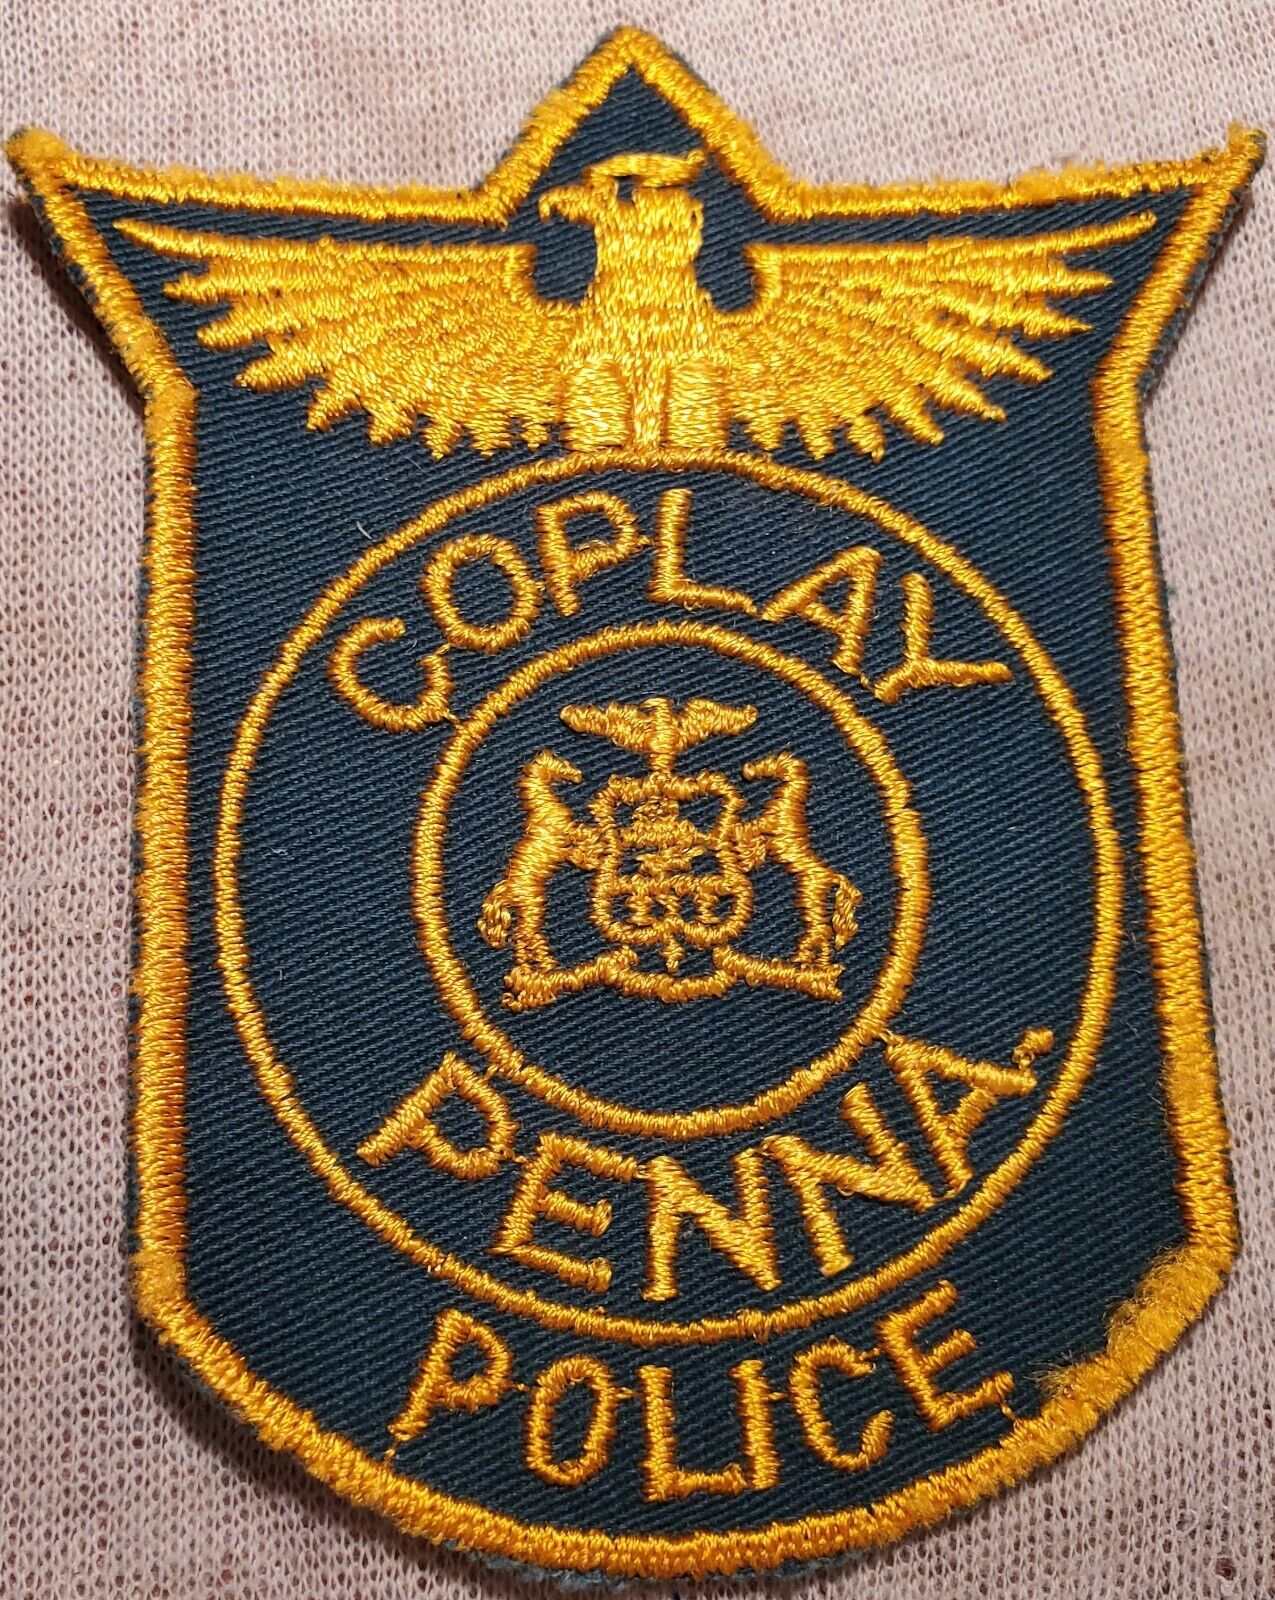 PA Vintage Coplay Pennsylvania Police Shoulder Patch